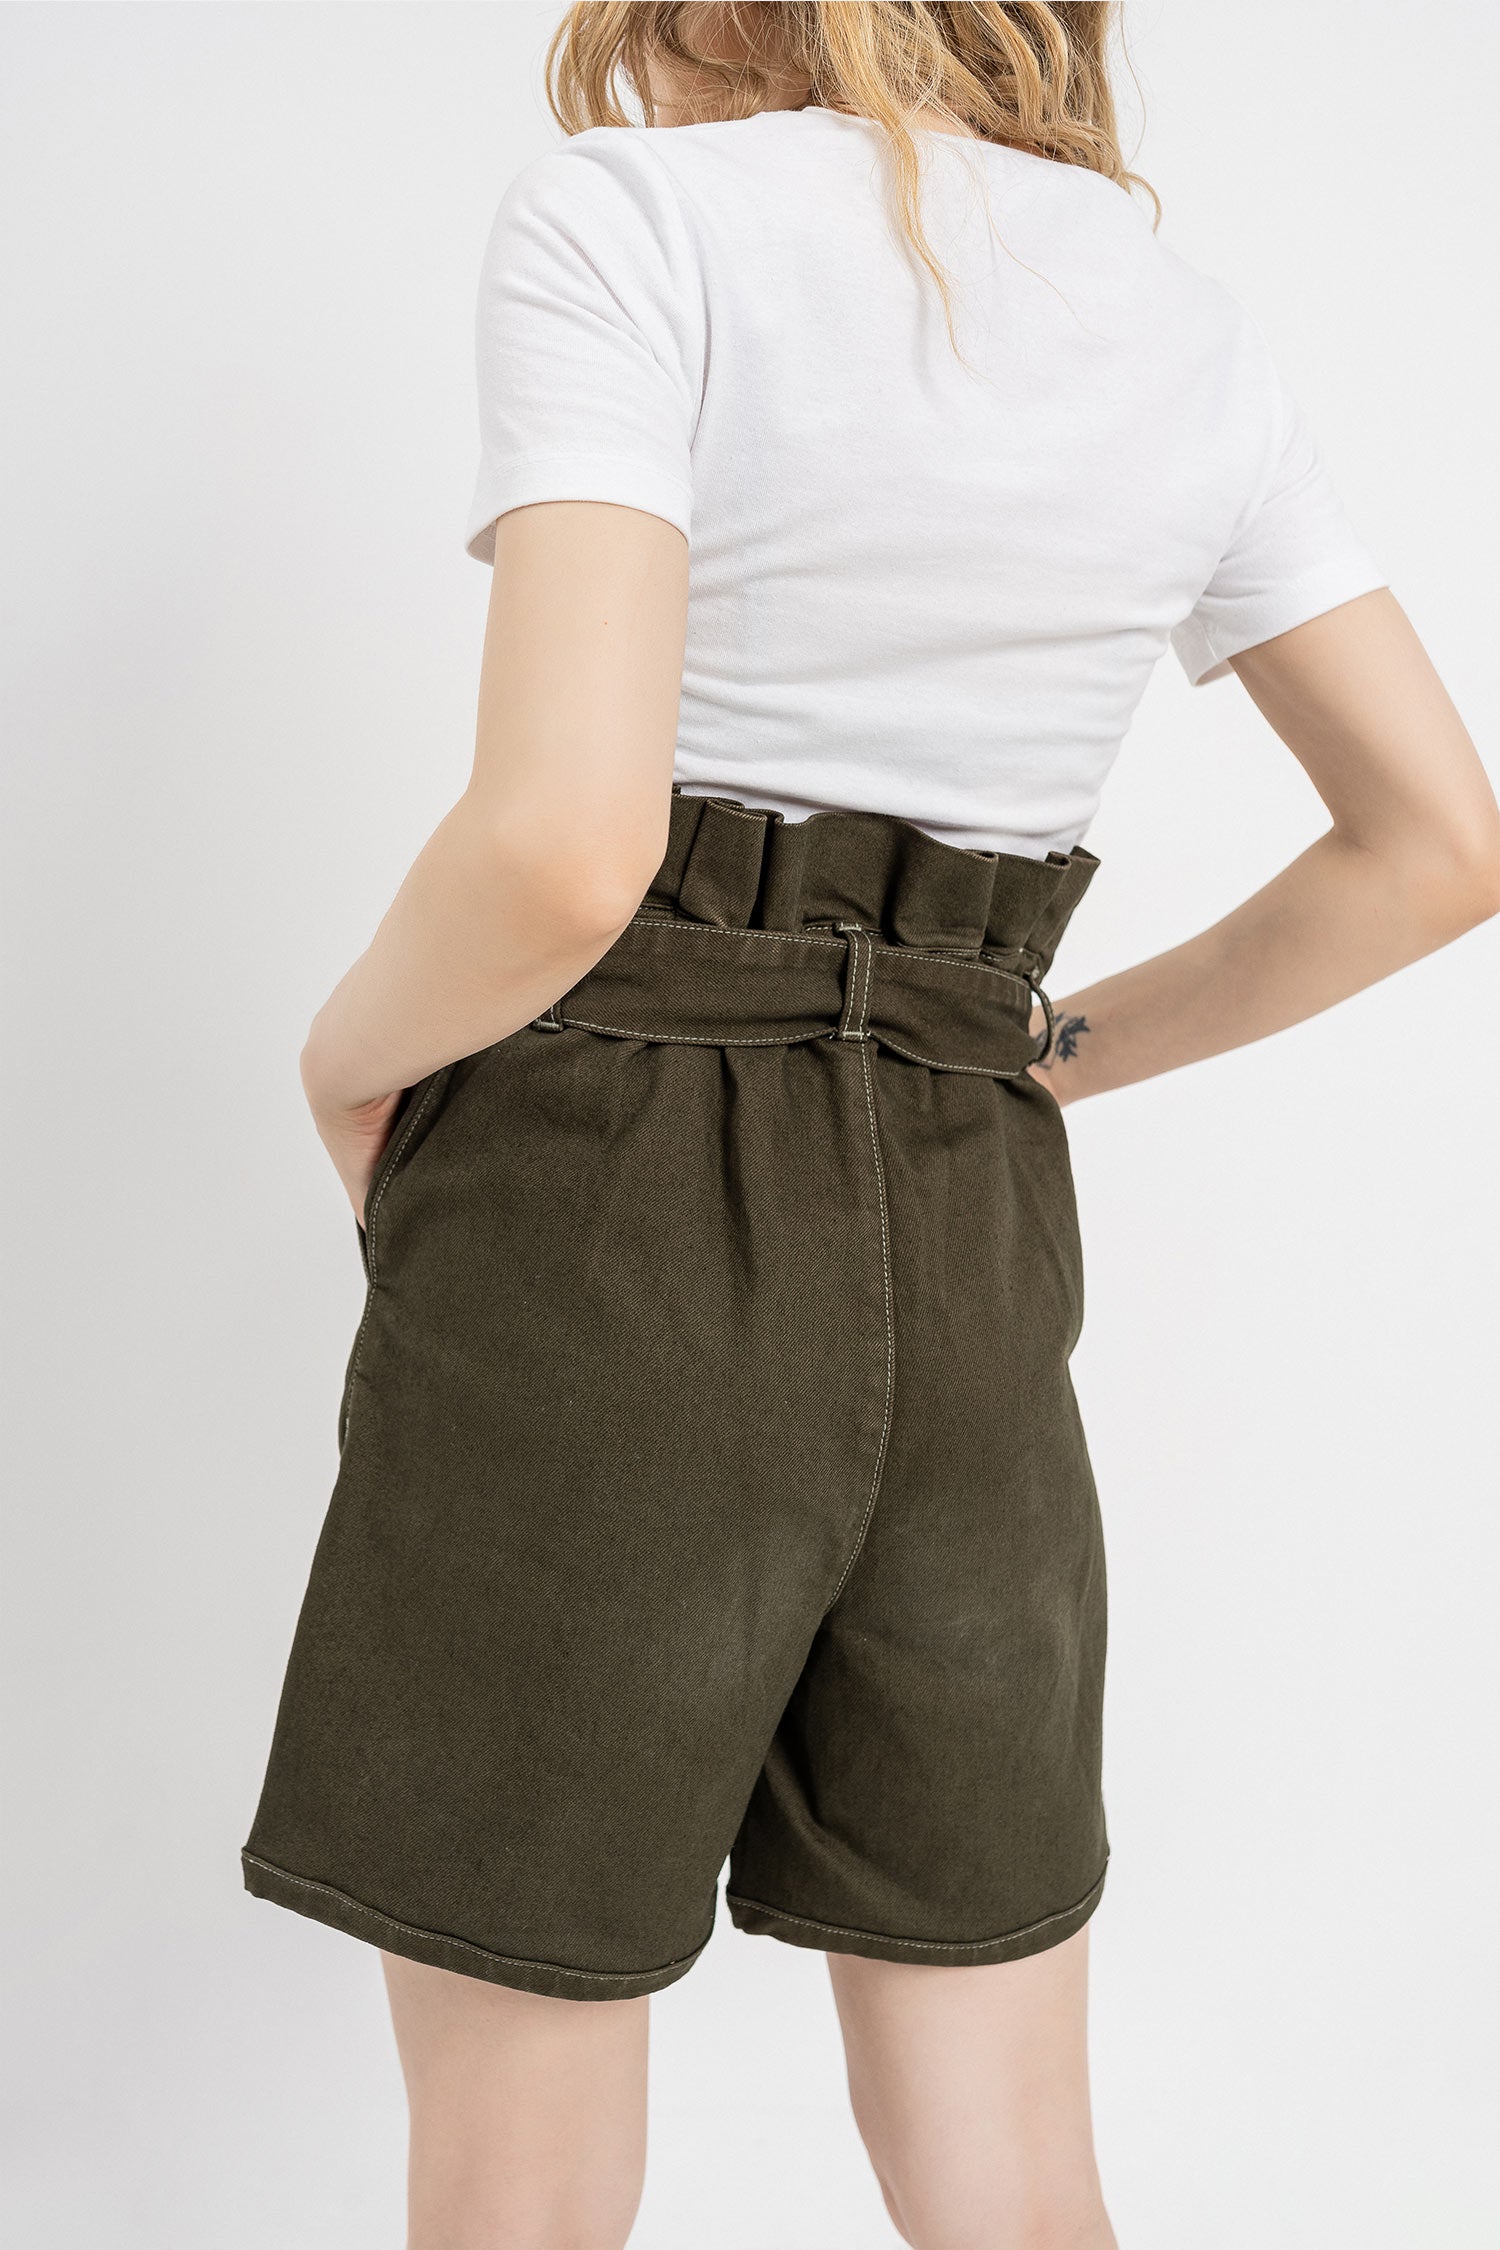 Military Crop Skirt